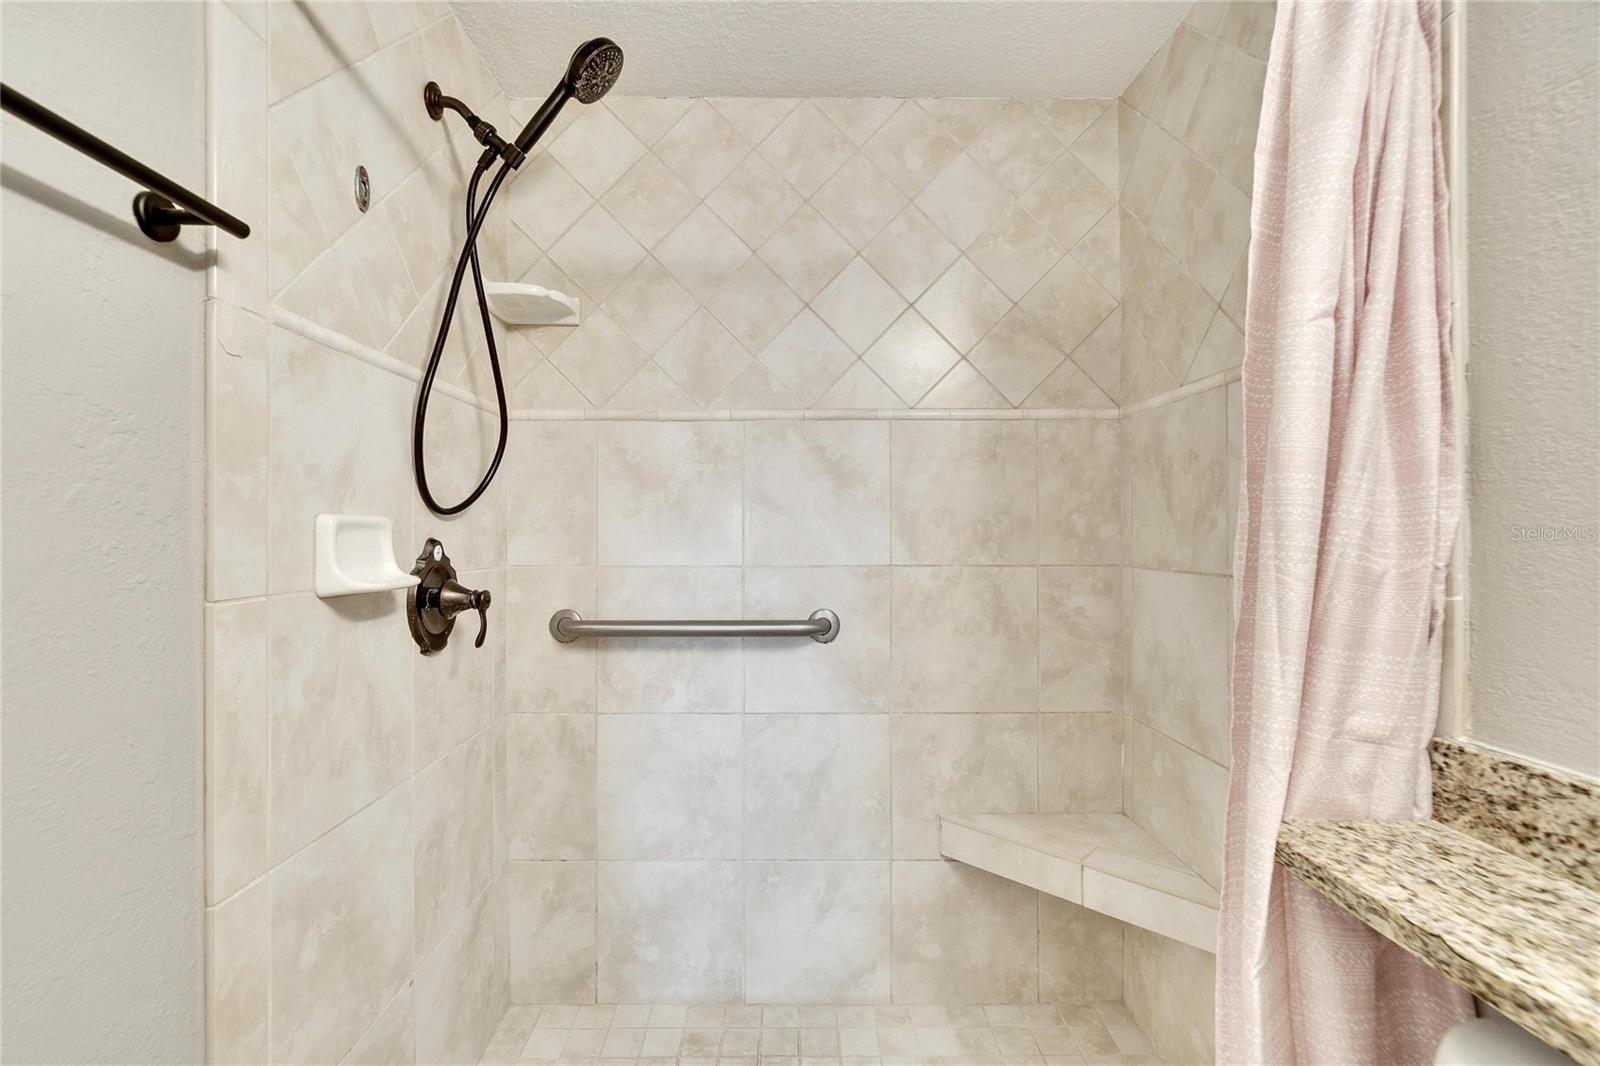 Tile surround in master shower.